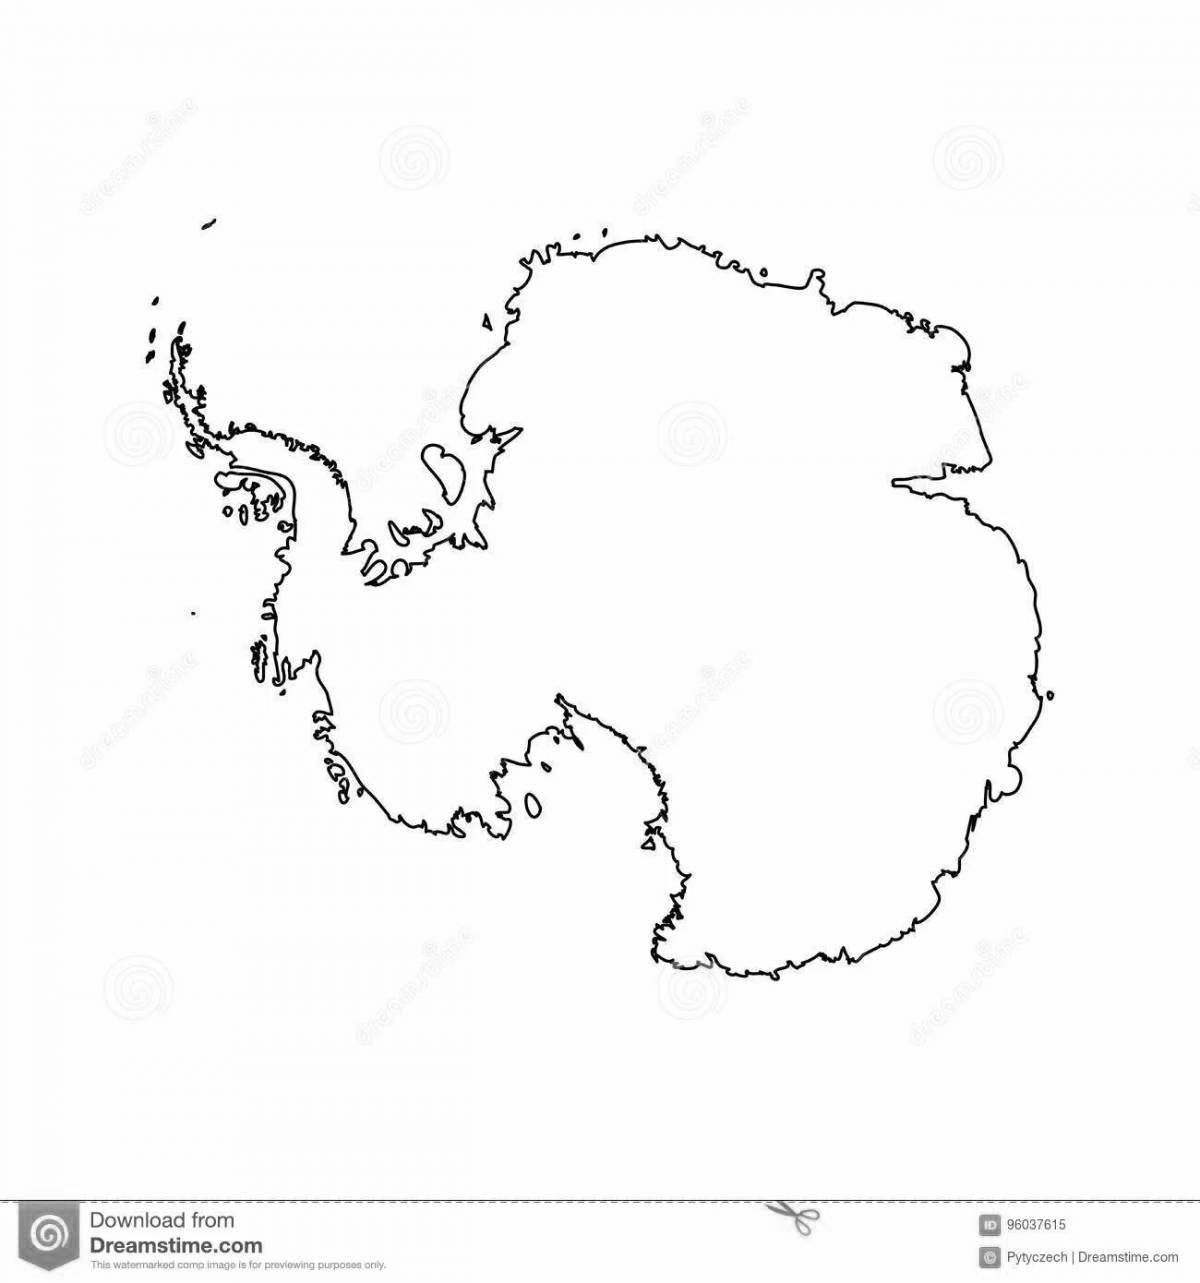 Антарктида контур на карте